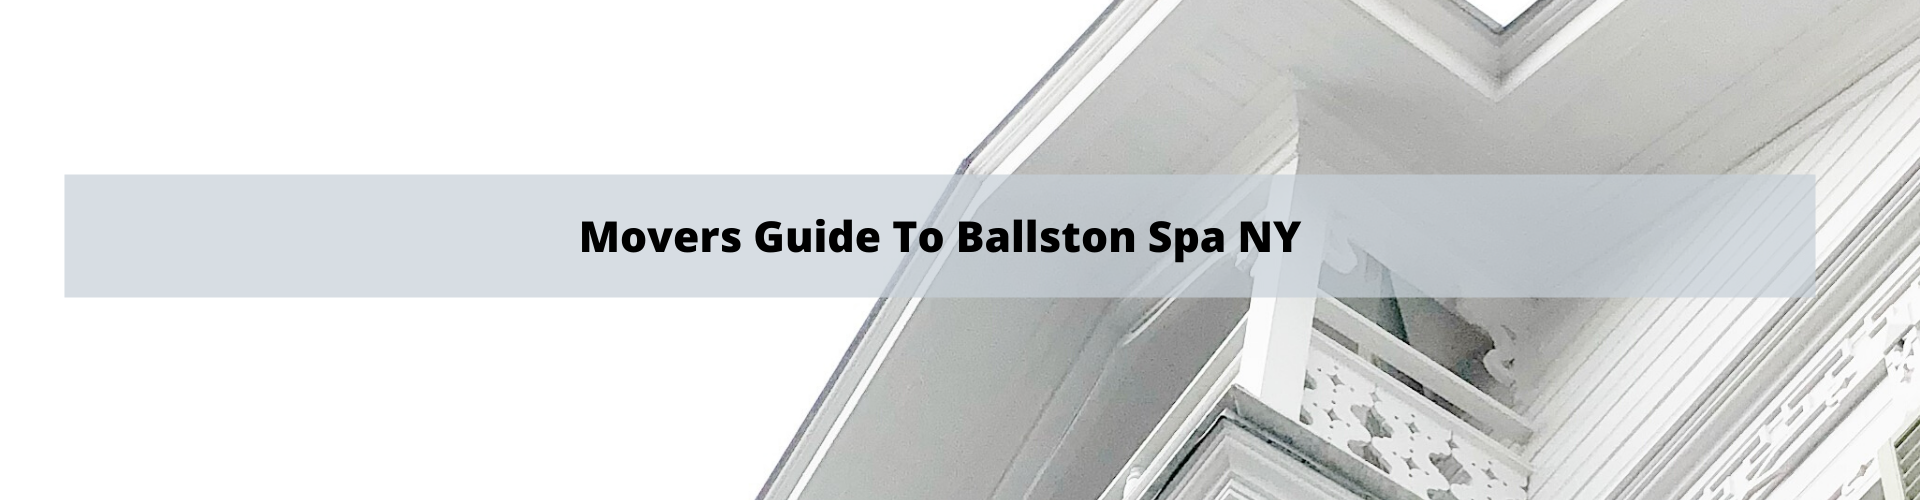 Movers Guide to Ballston Spa - White House